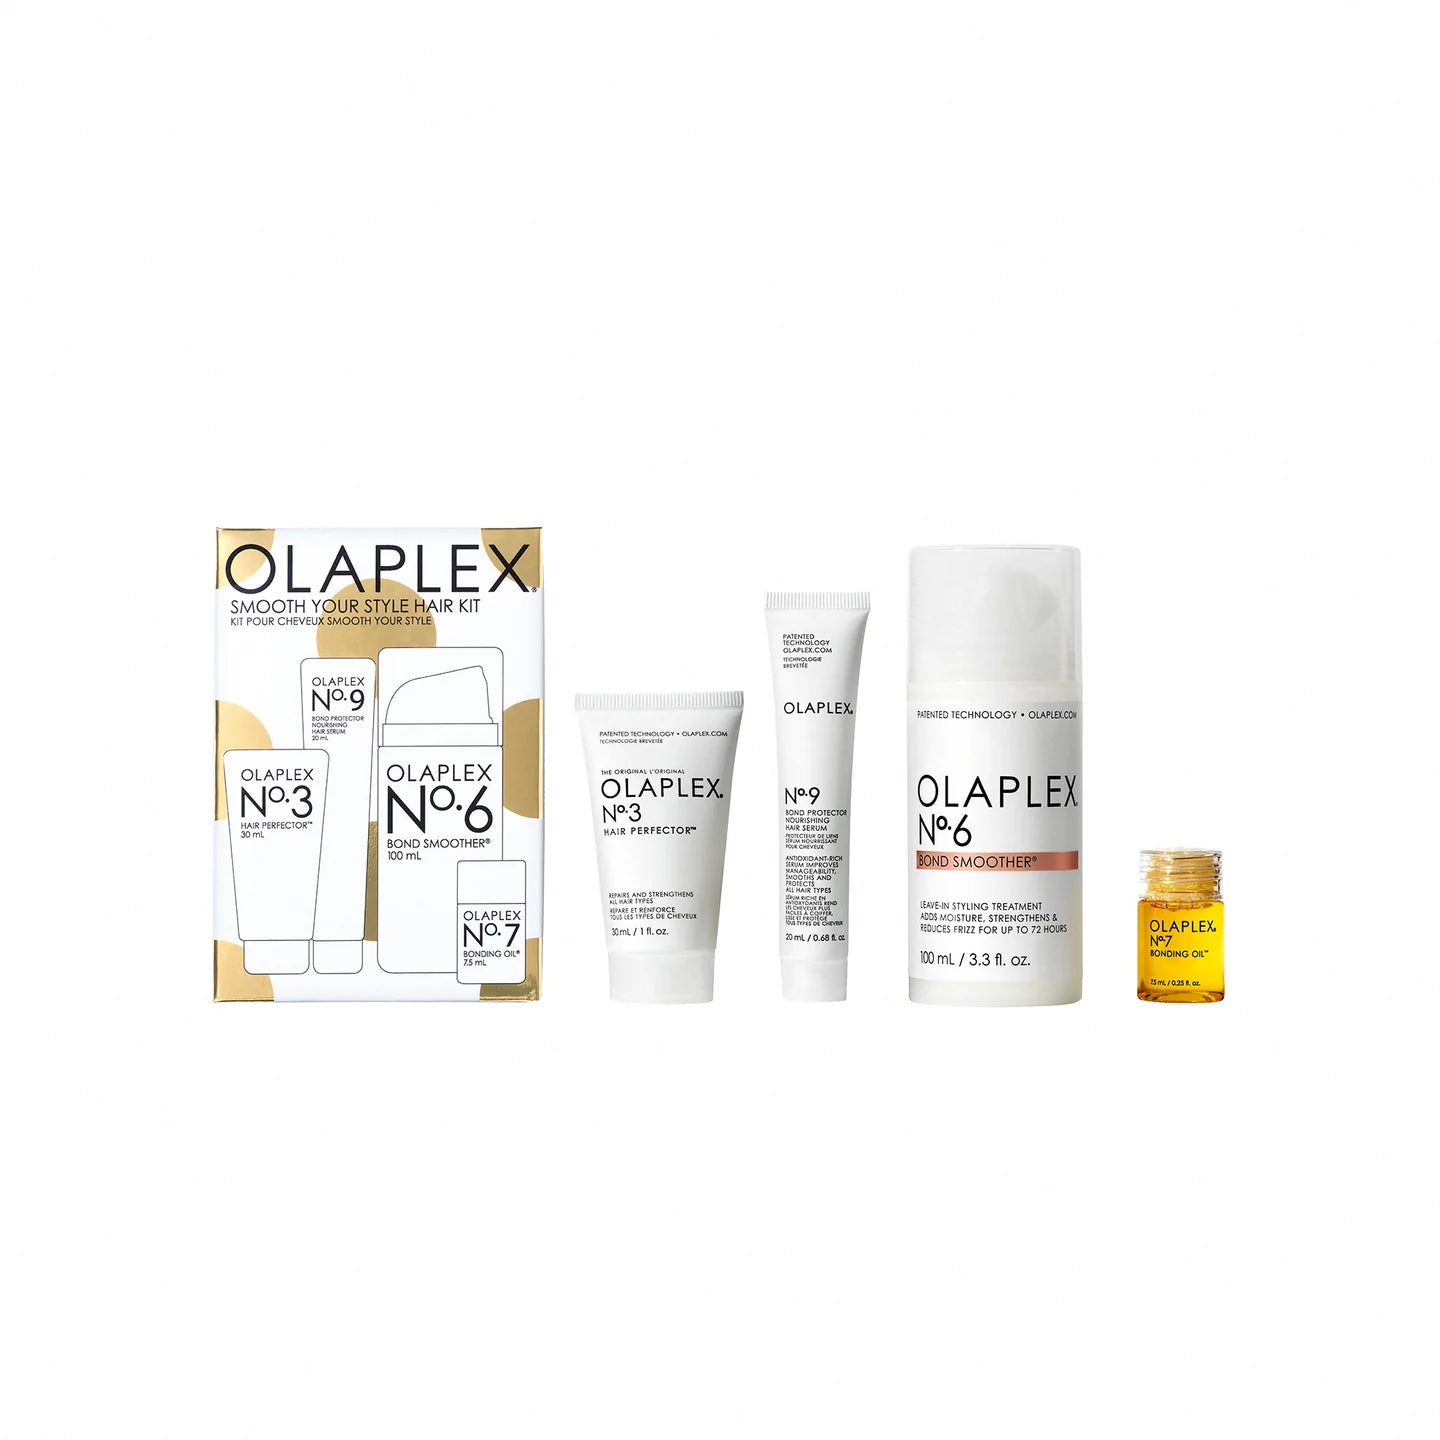 Olaplex limited edition product image